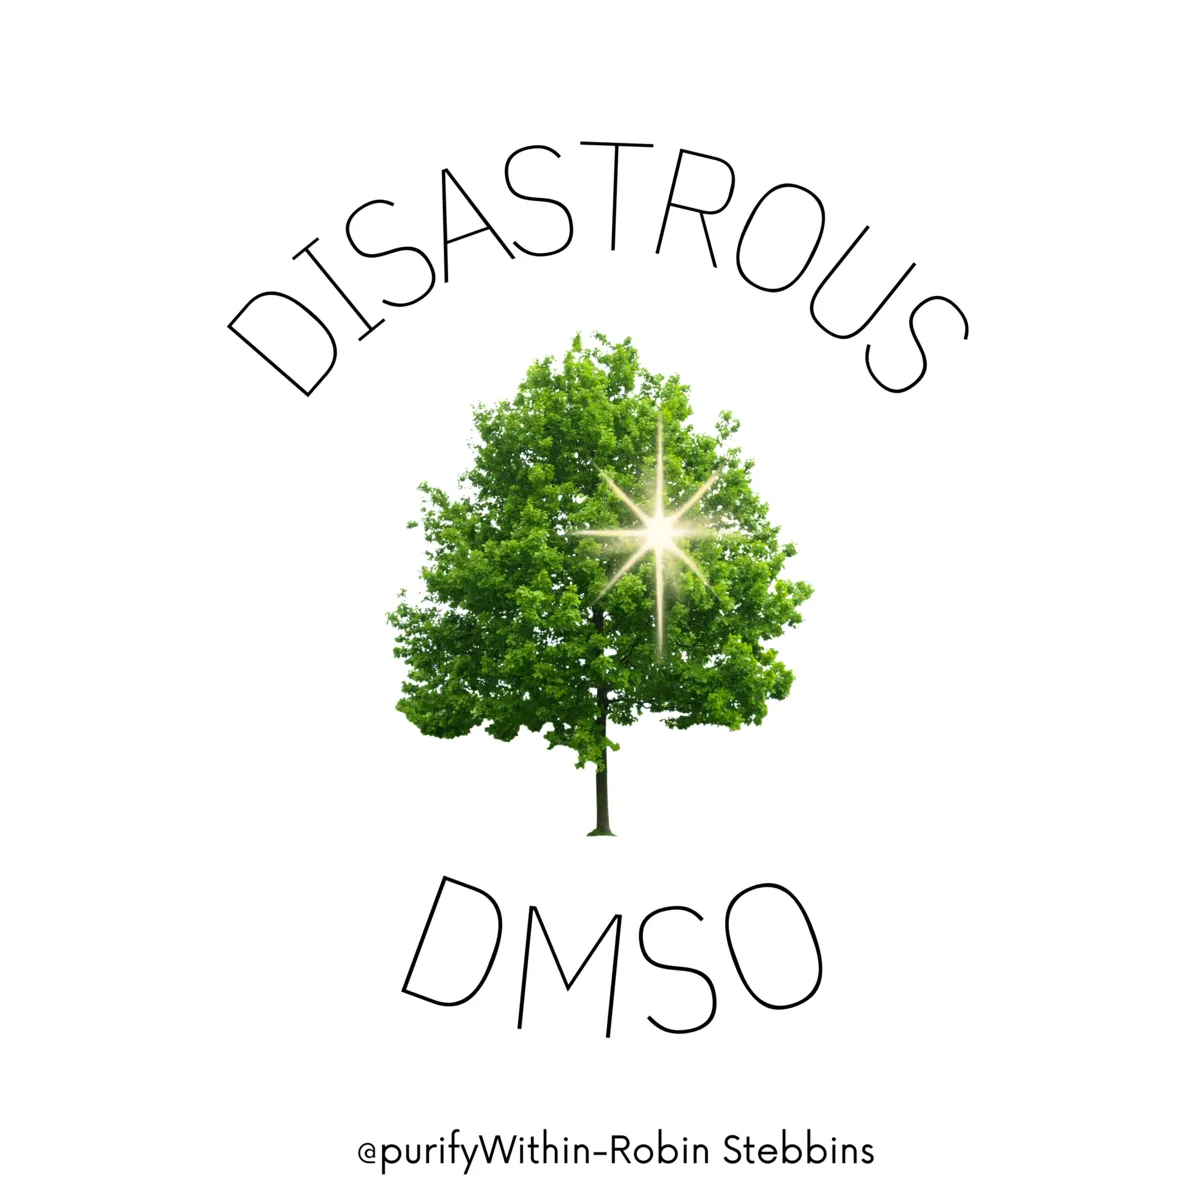 Disastrous DMSO